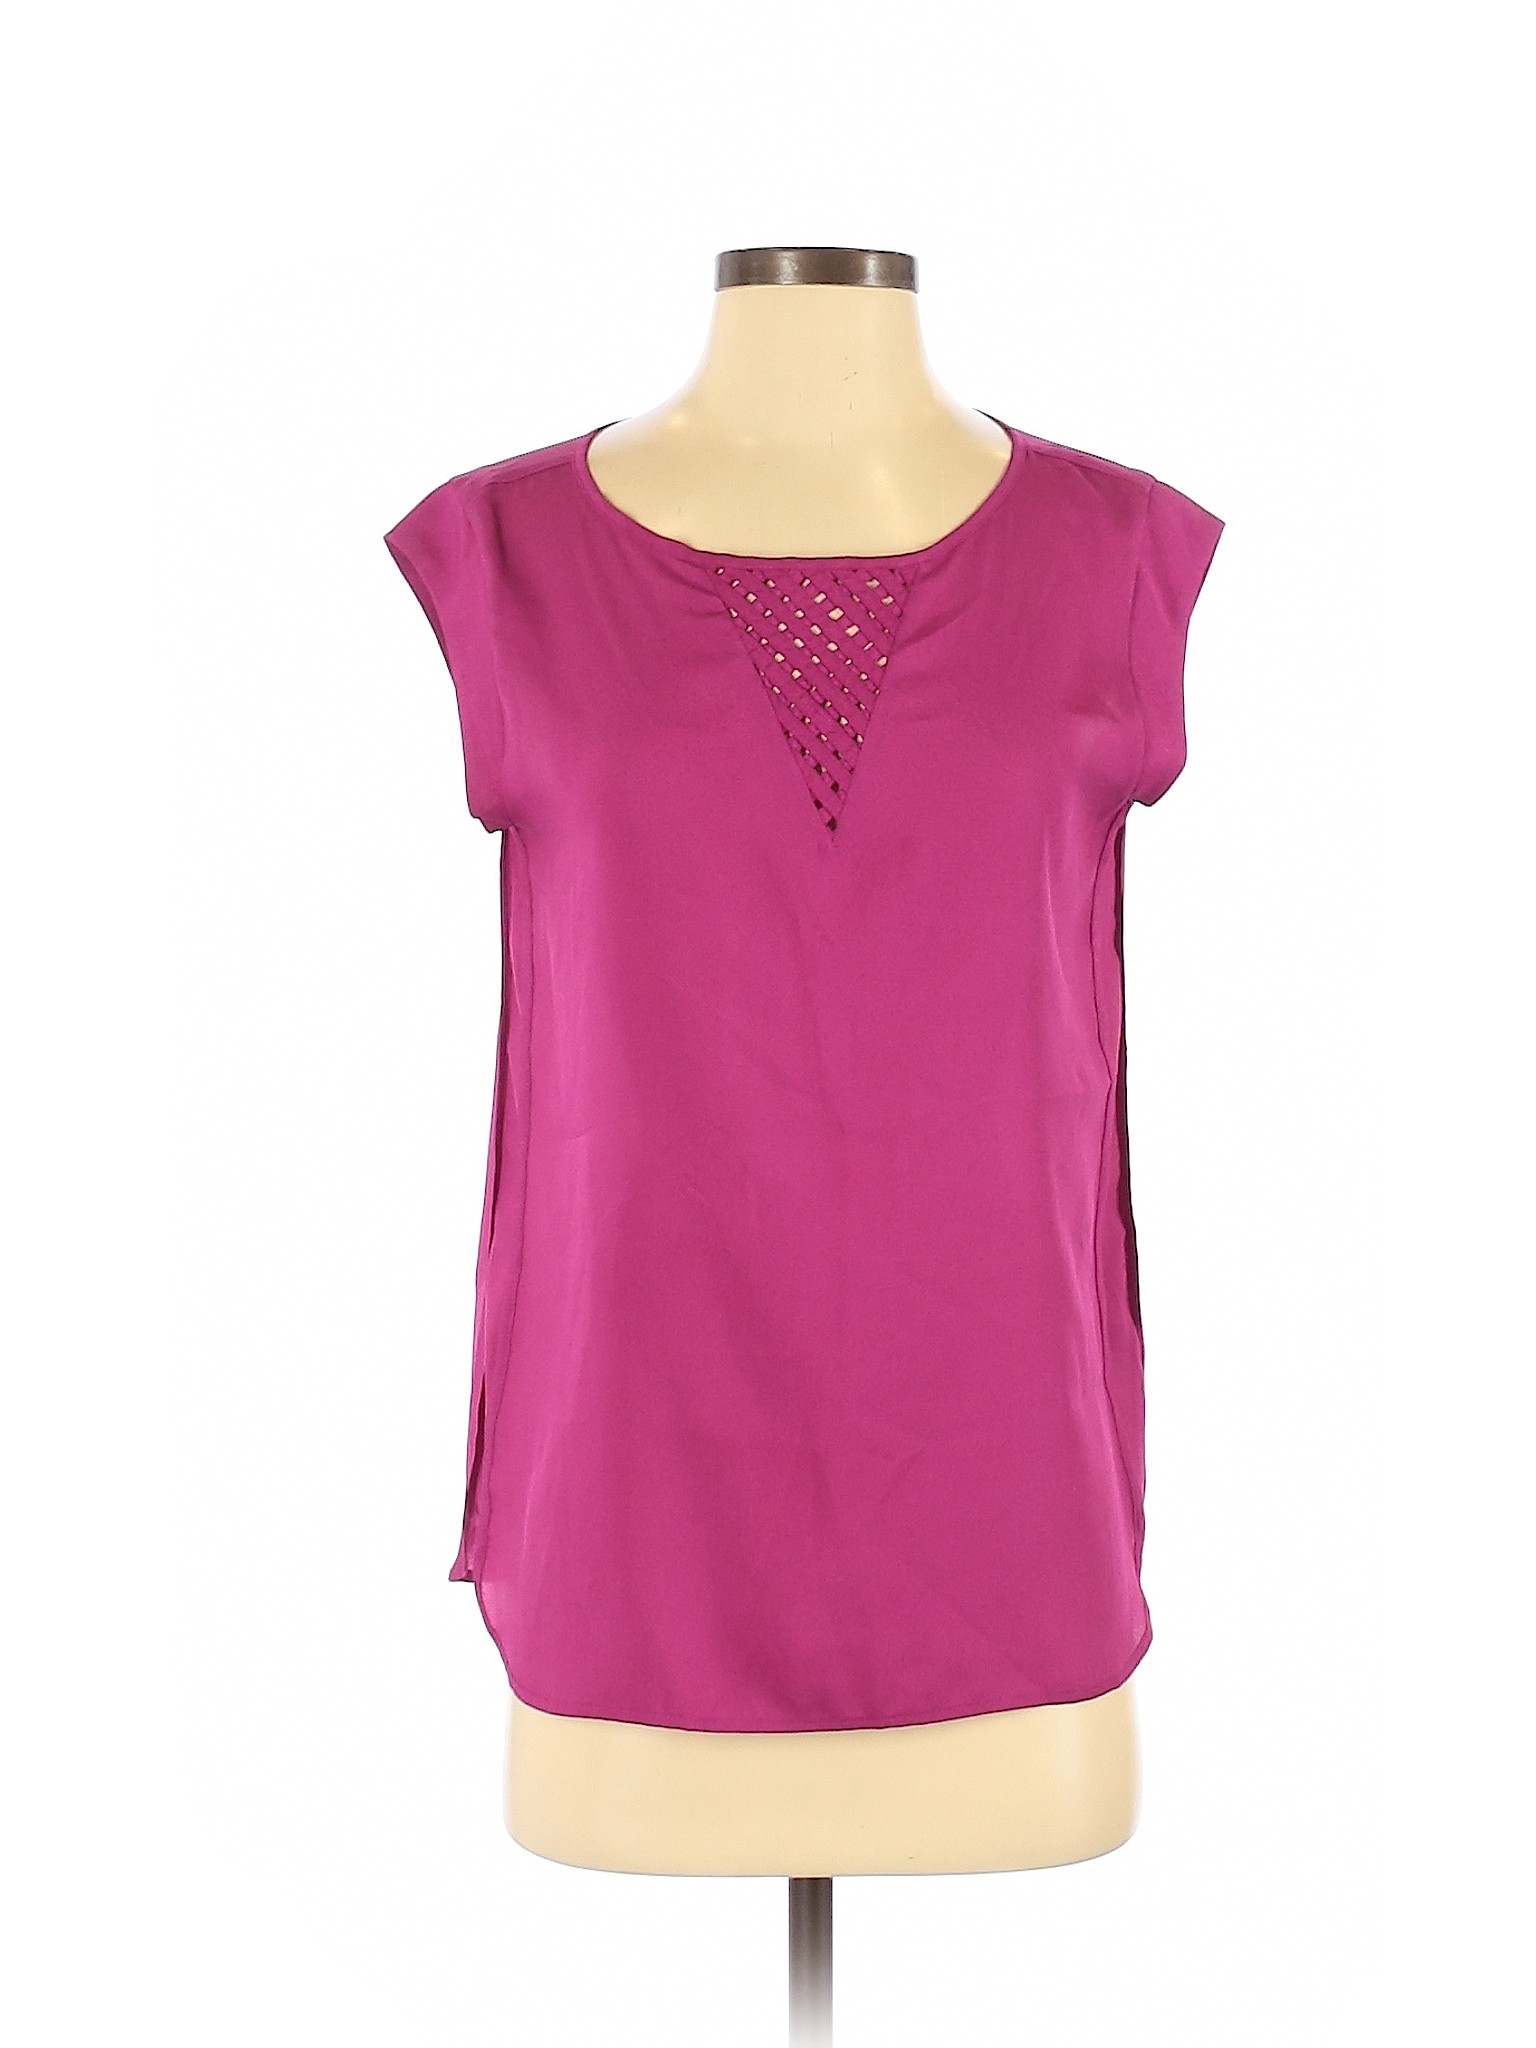 The Limited Women Purple Sleeveless Top S | eBay